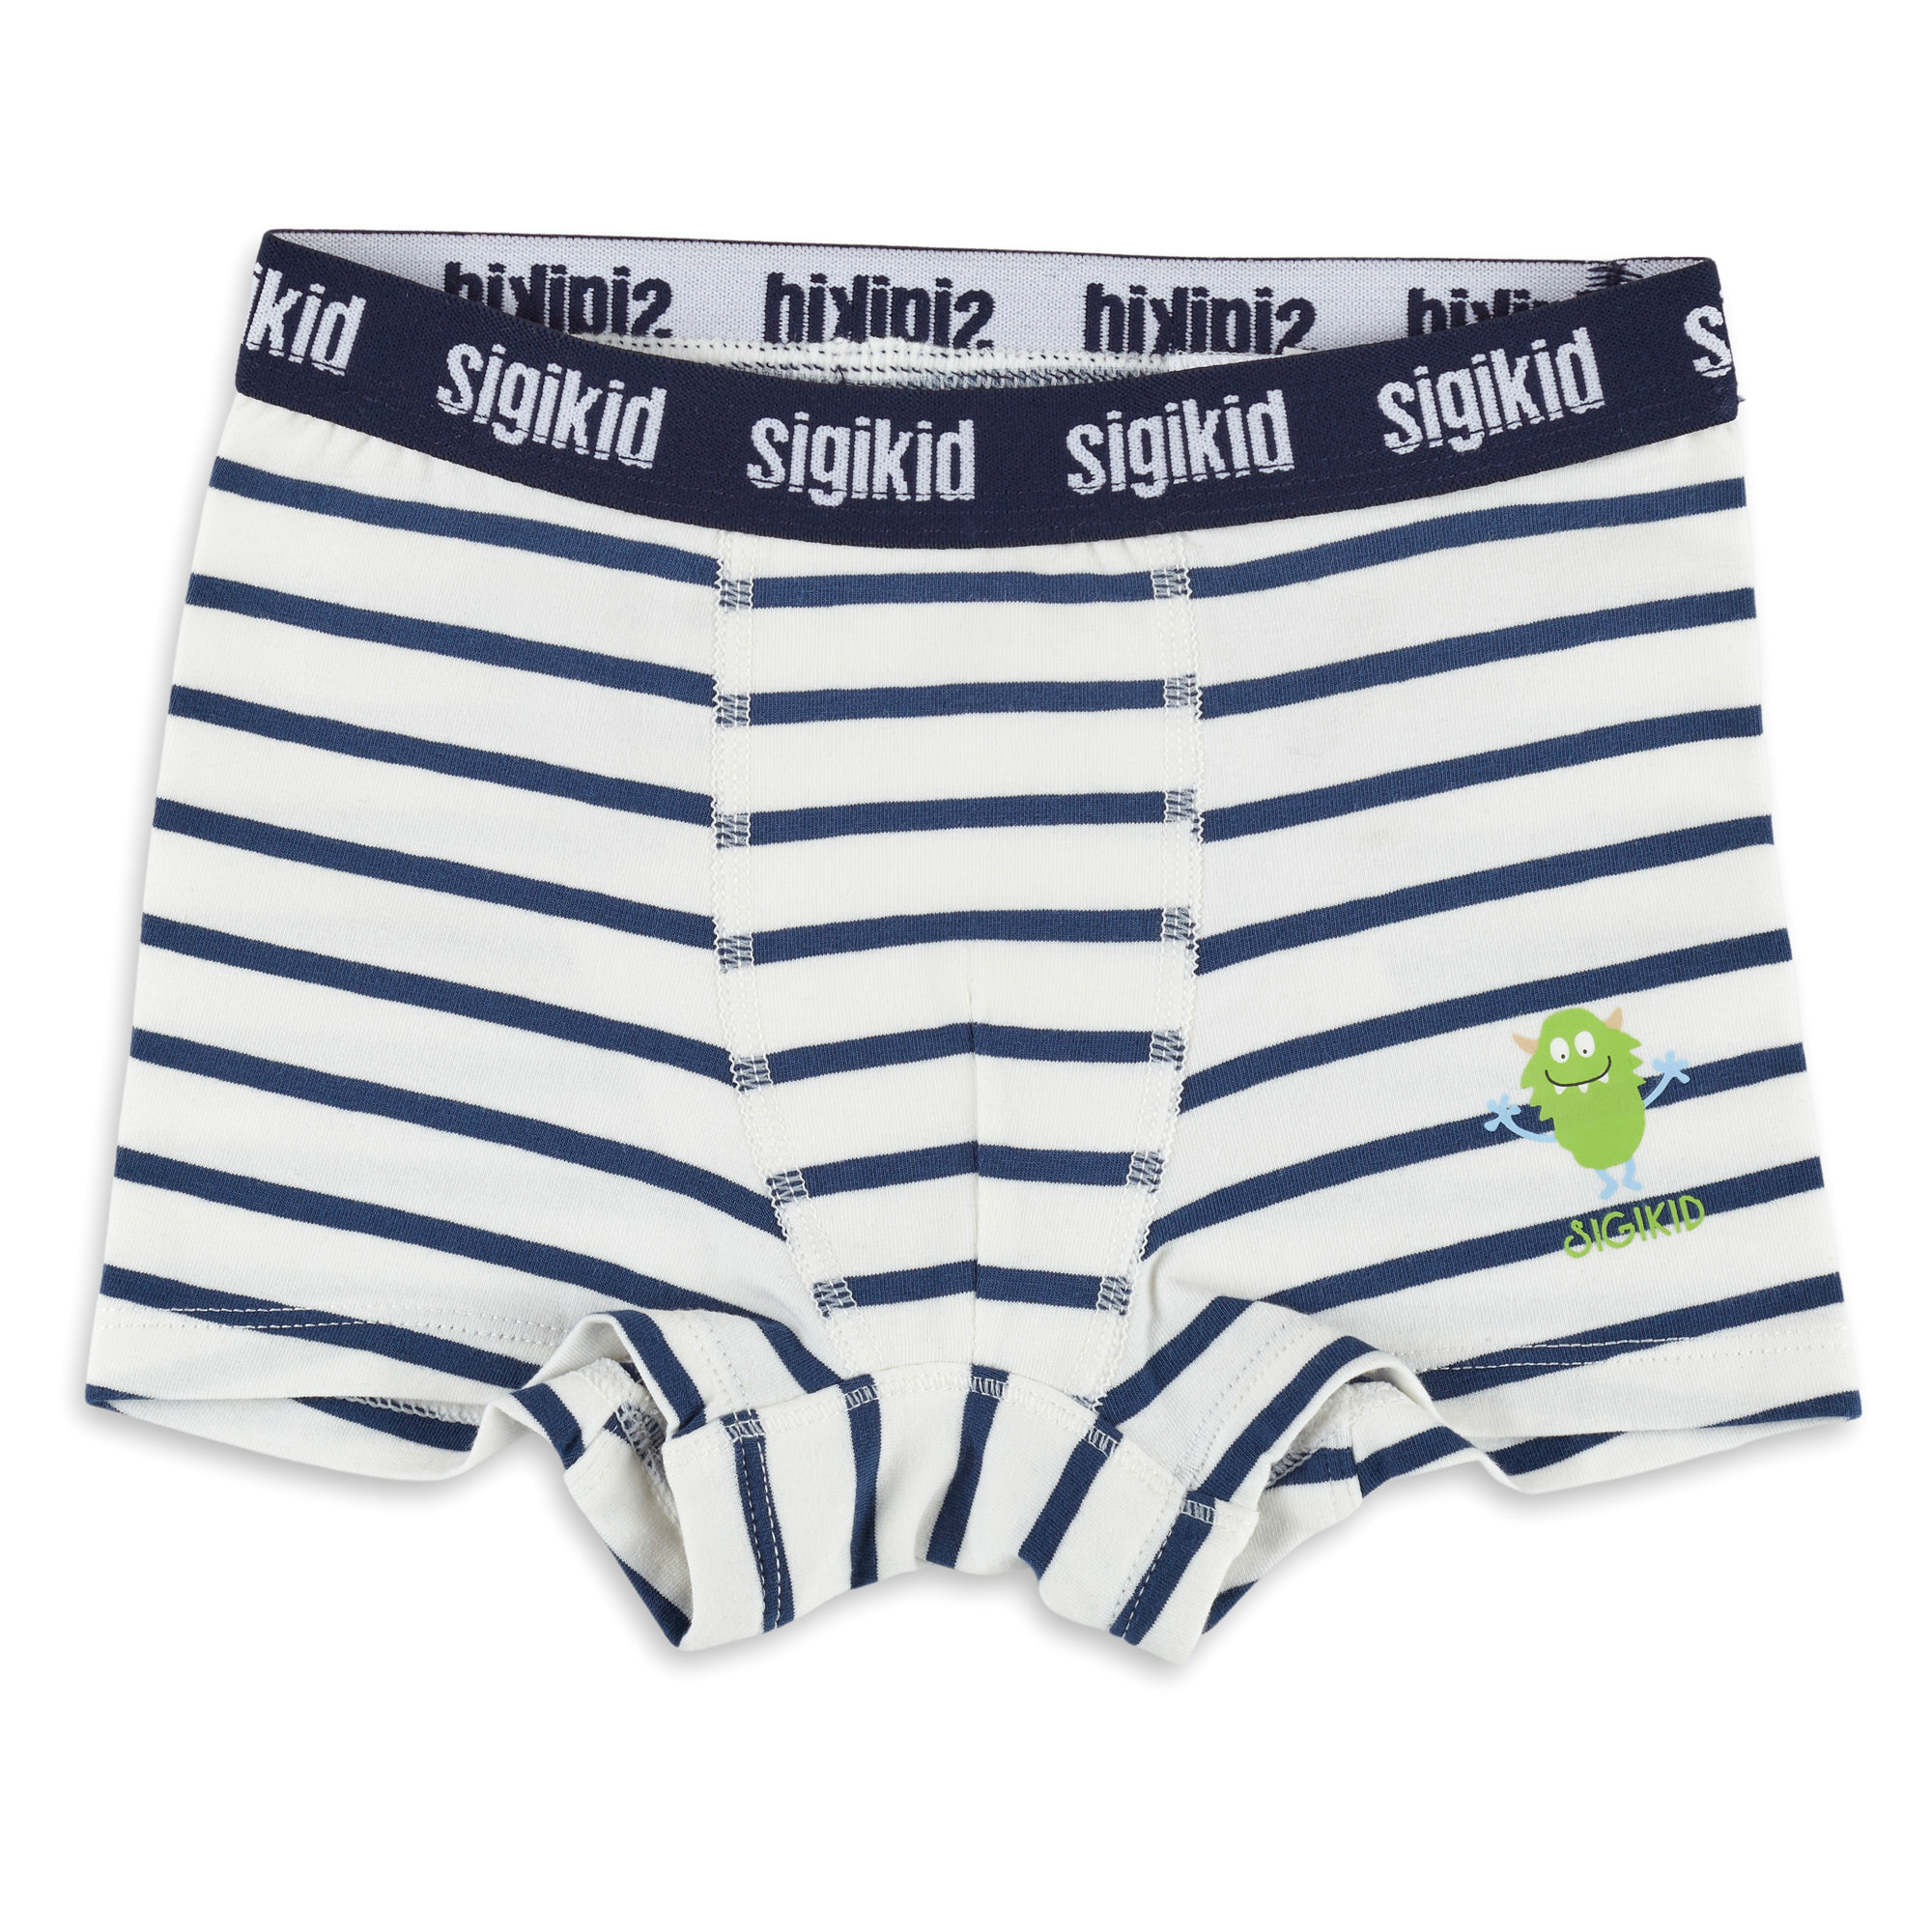 Boys' undertee & boxer shorts set white/blue striped